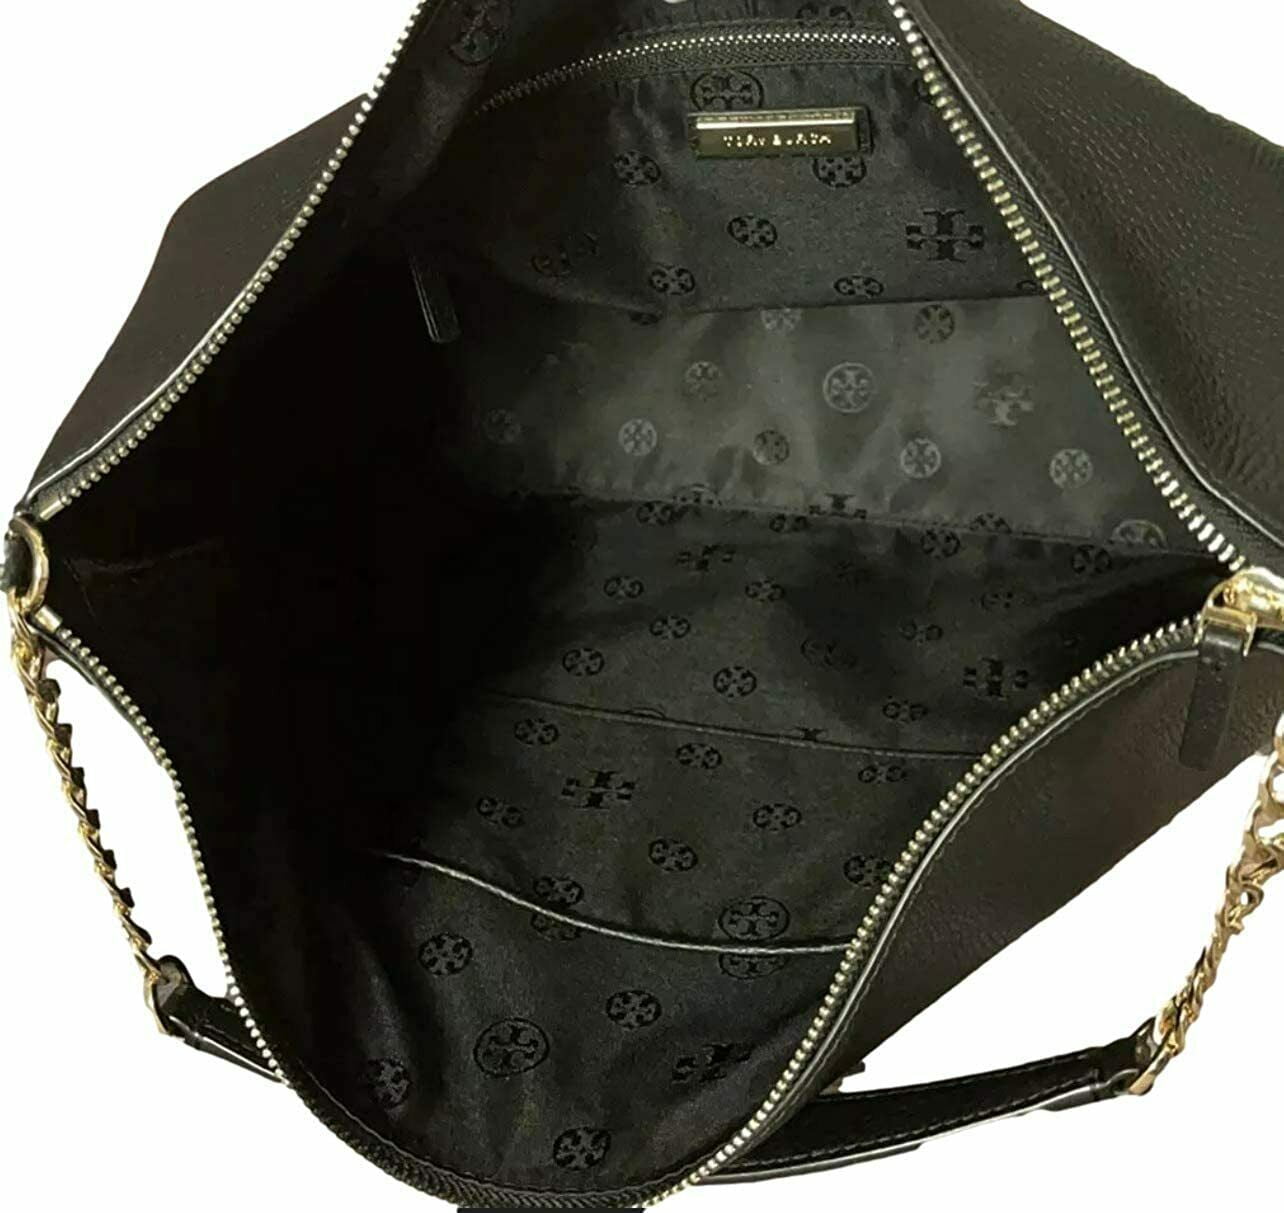 Tory Burch Carter Slouchy Pebble Leather Reva Zip Chain Hobo Bag in Black -  